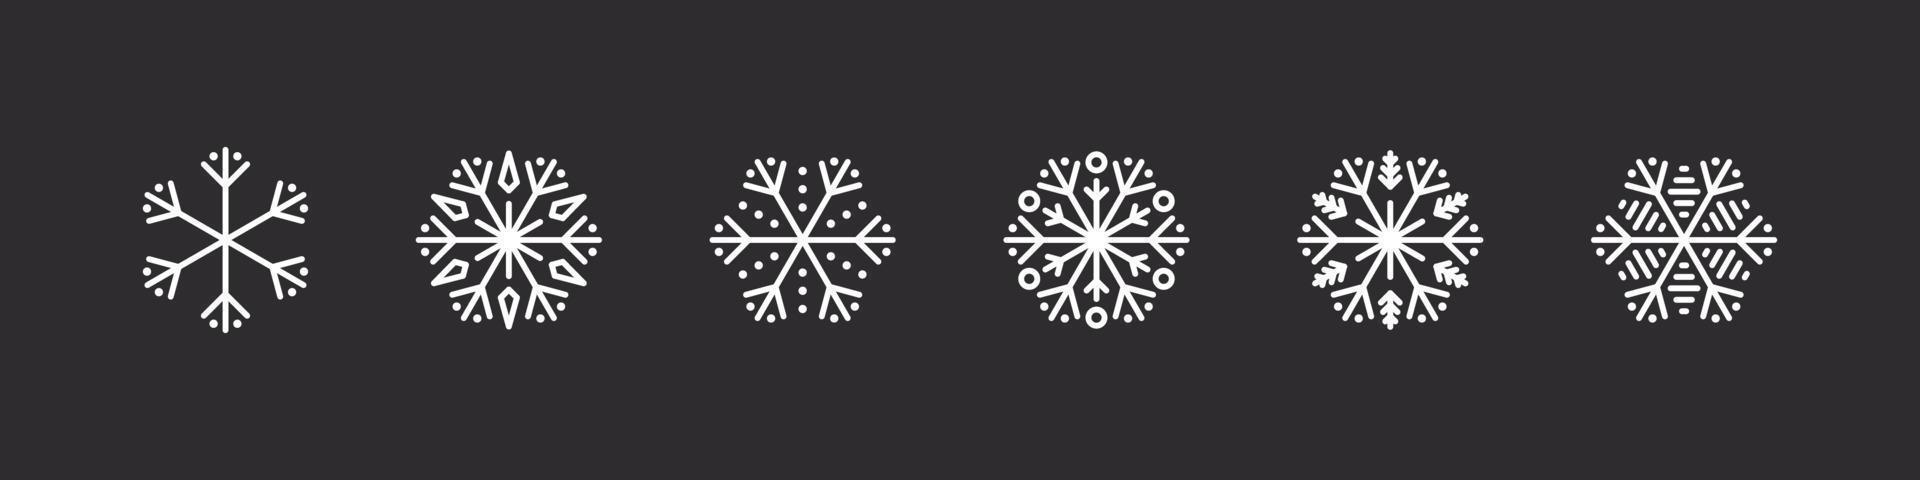 Snowflakes set. White snowflakes on a dark background. Xmas signs. Beautifully snowflakes. Vector illustration